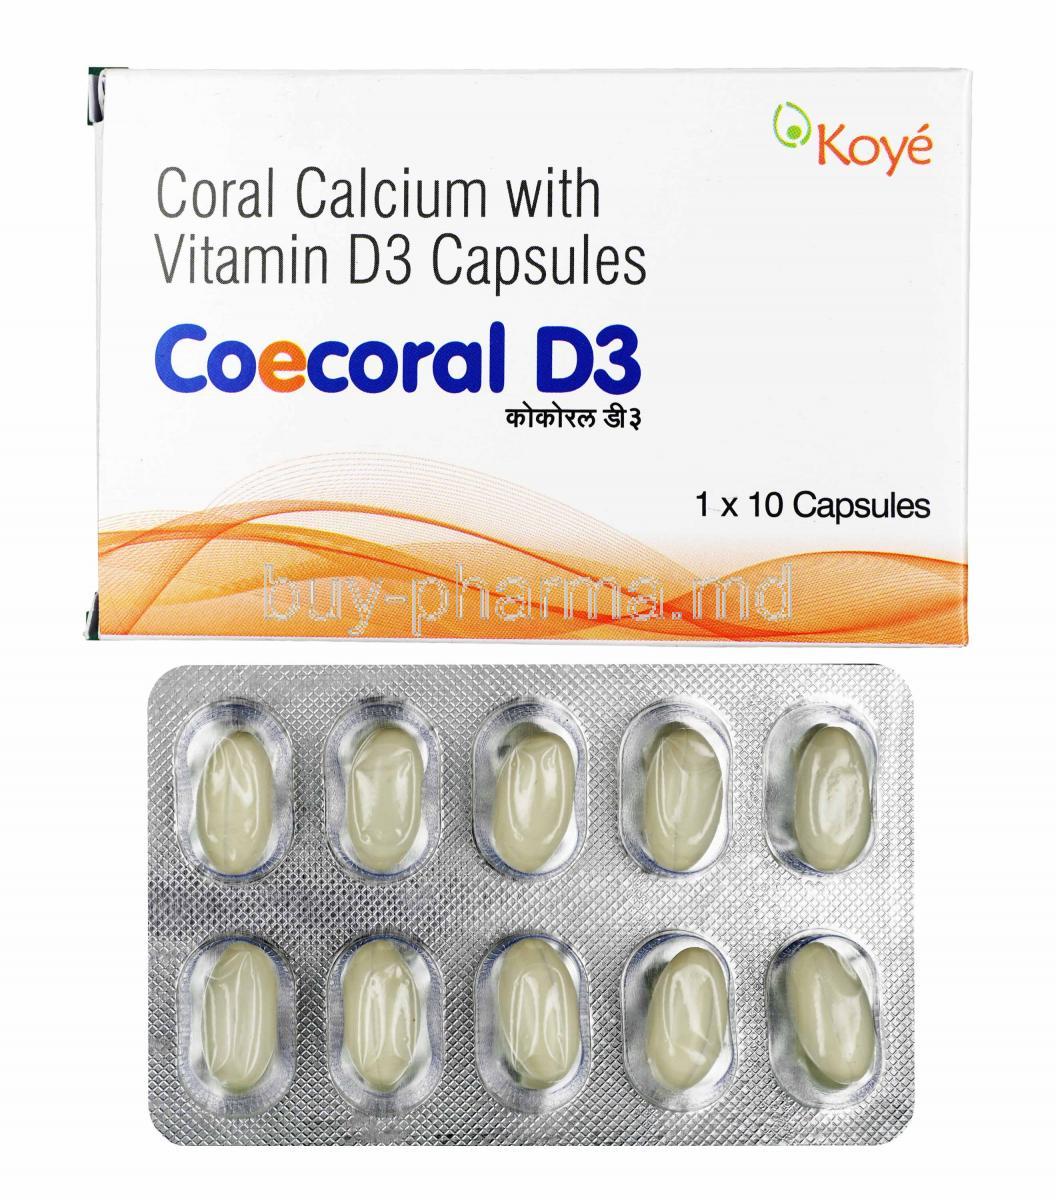 Coecoral D3, Elemental Calcium and Vitamin D3 box and capsules